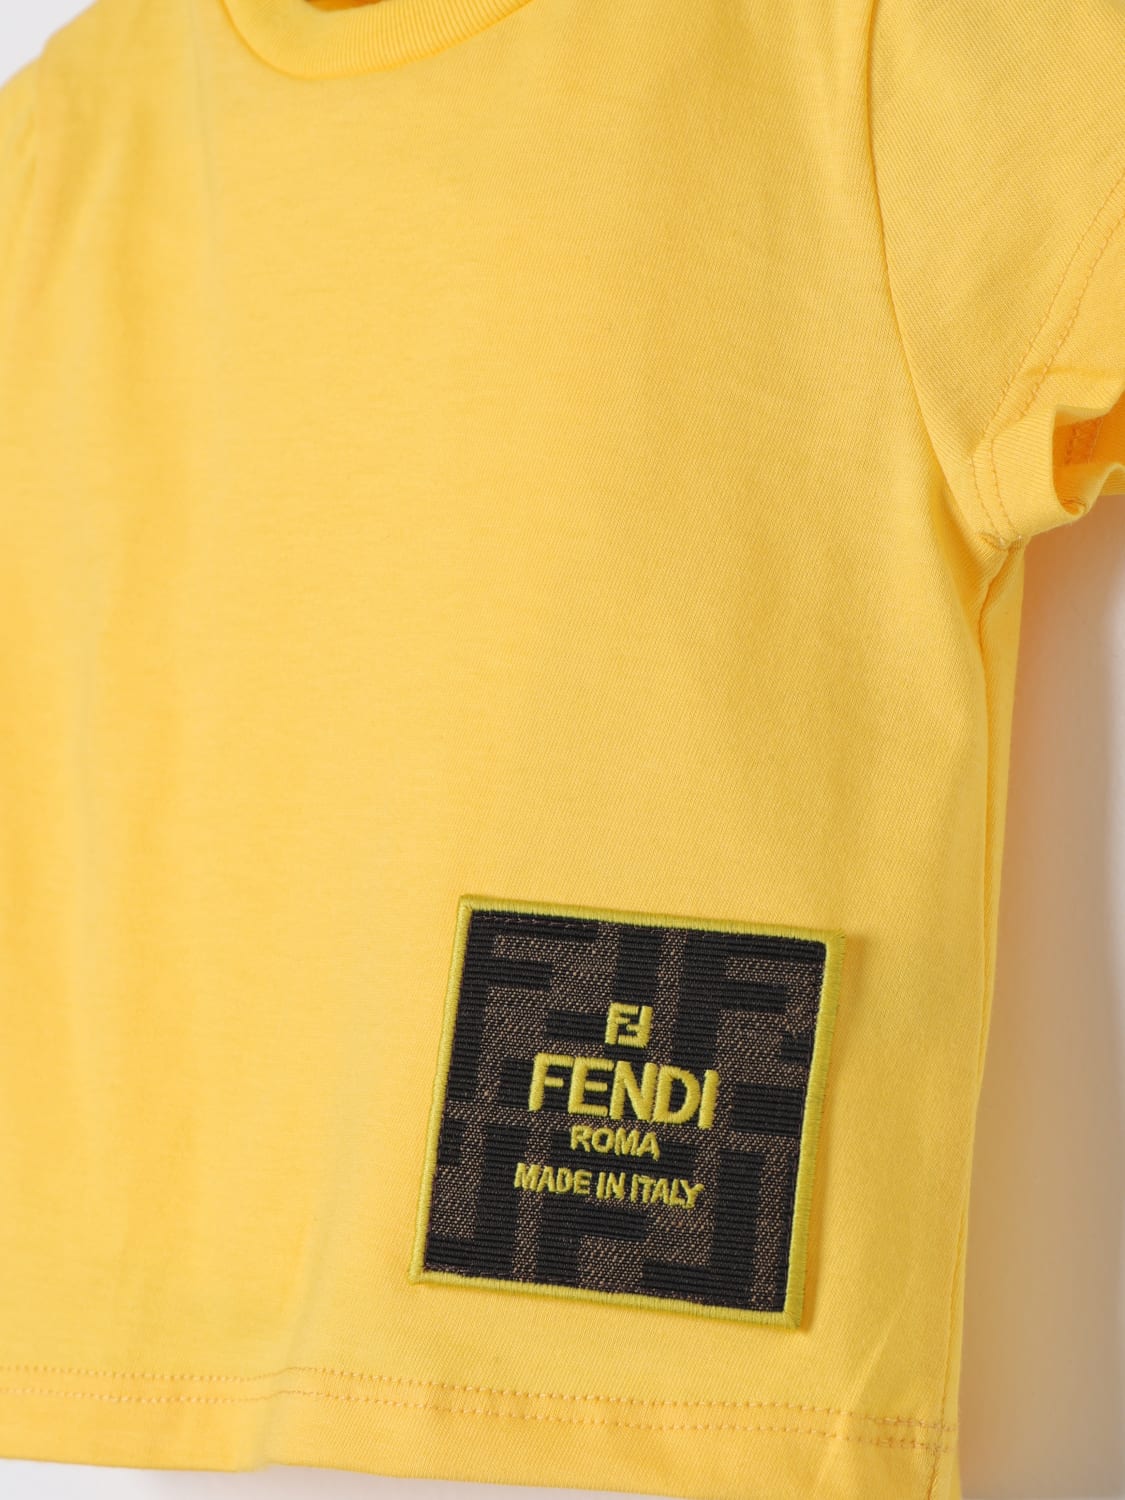 fendi shirt infant - Boys tops & t-shirts